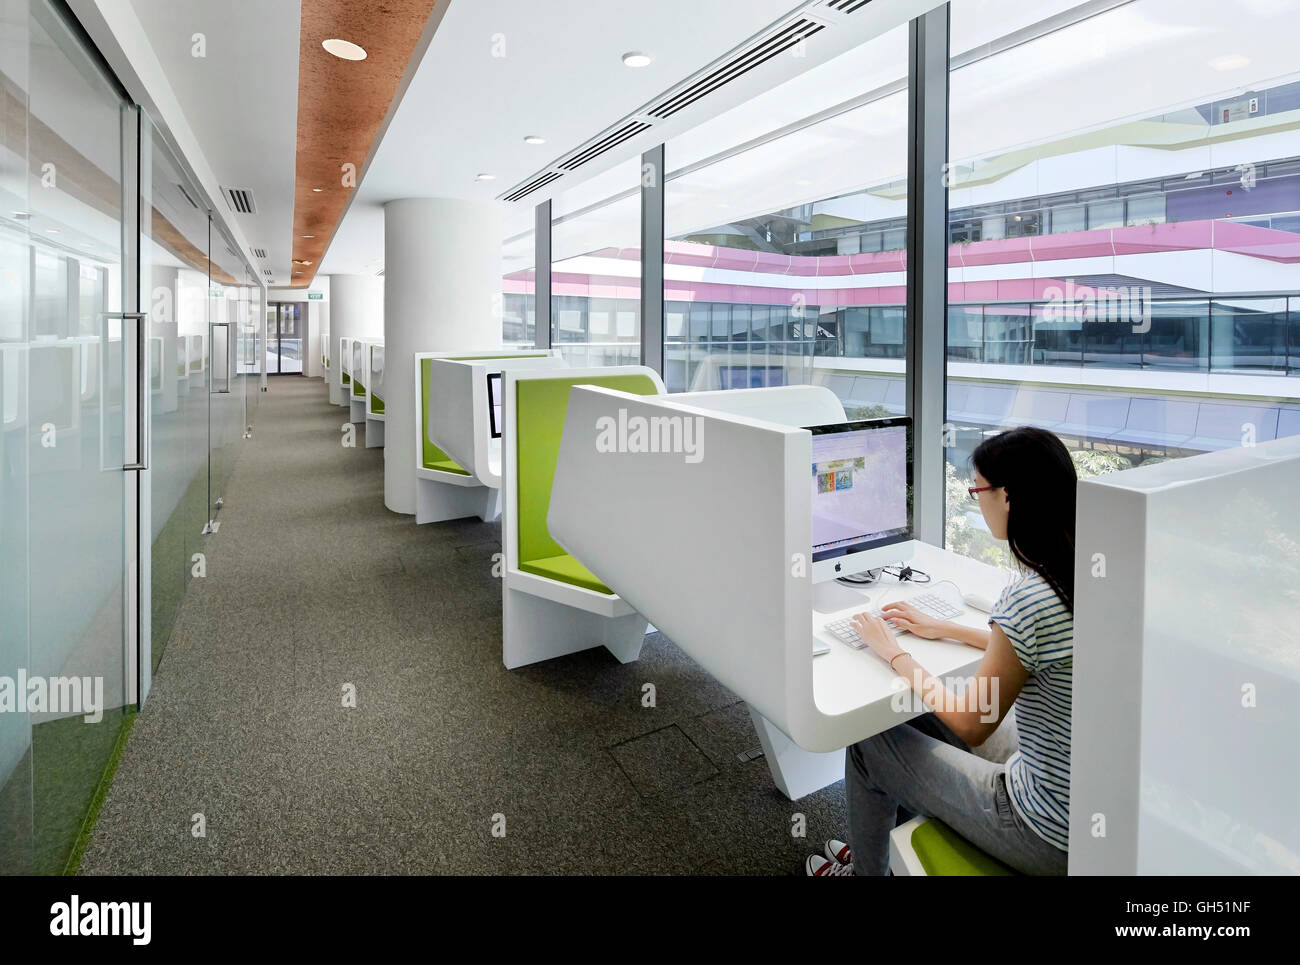 Corridor with window wall and individual IT desks. Singapore University of Technology and Design, Singapore, Singapore. Architect: UNStudio, 2015. Stock Photo